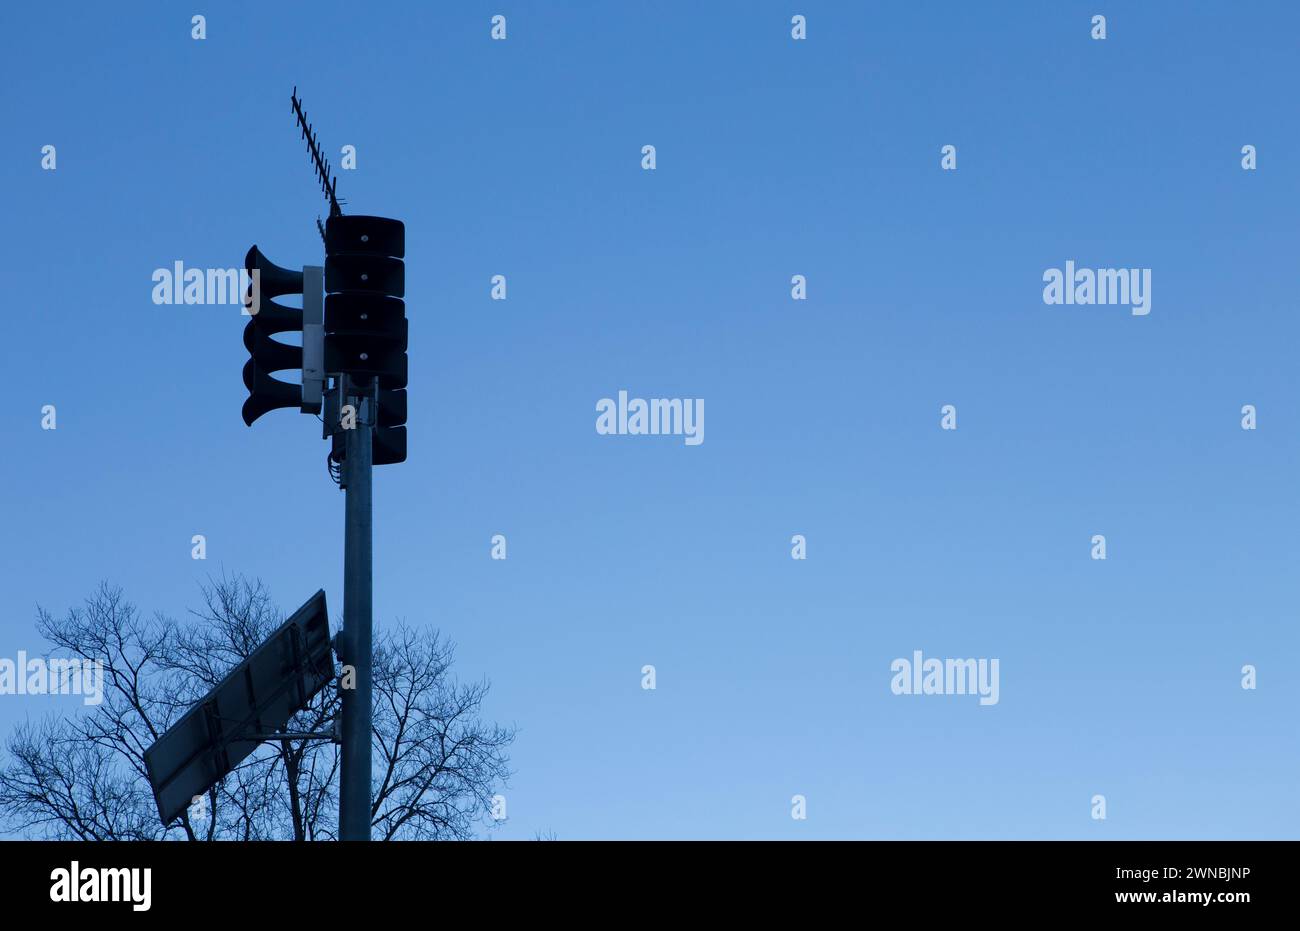 Solar-powered horn loudspeakers pole. Dawn blue light background Stock Photo